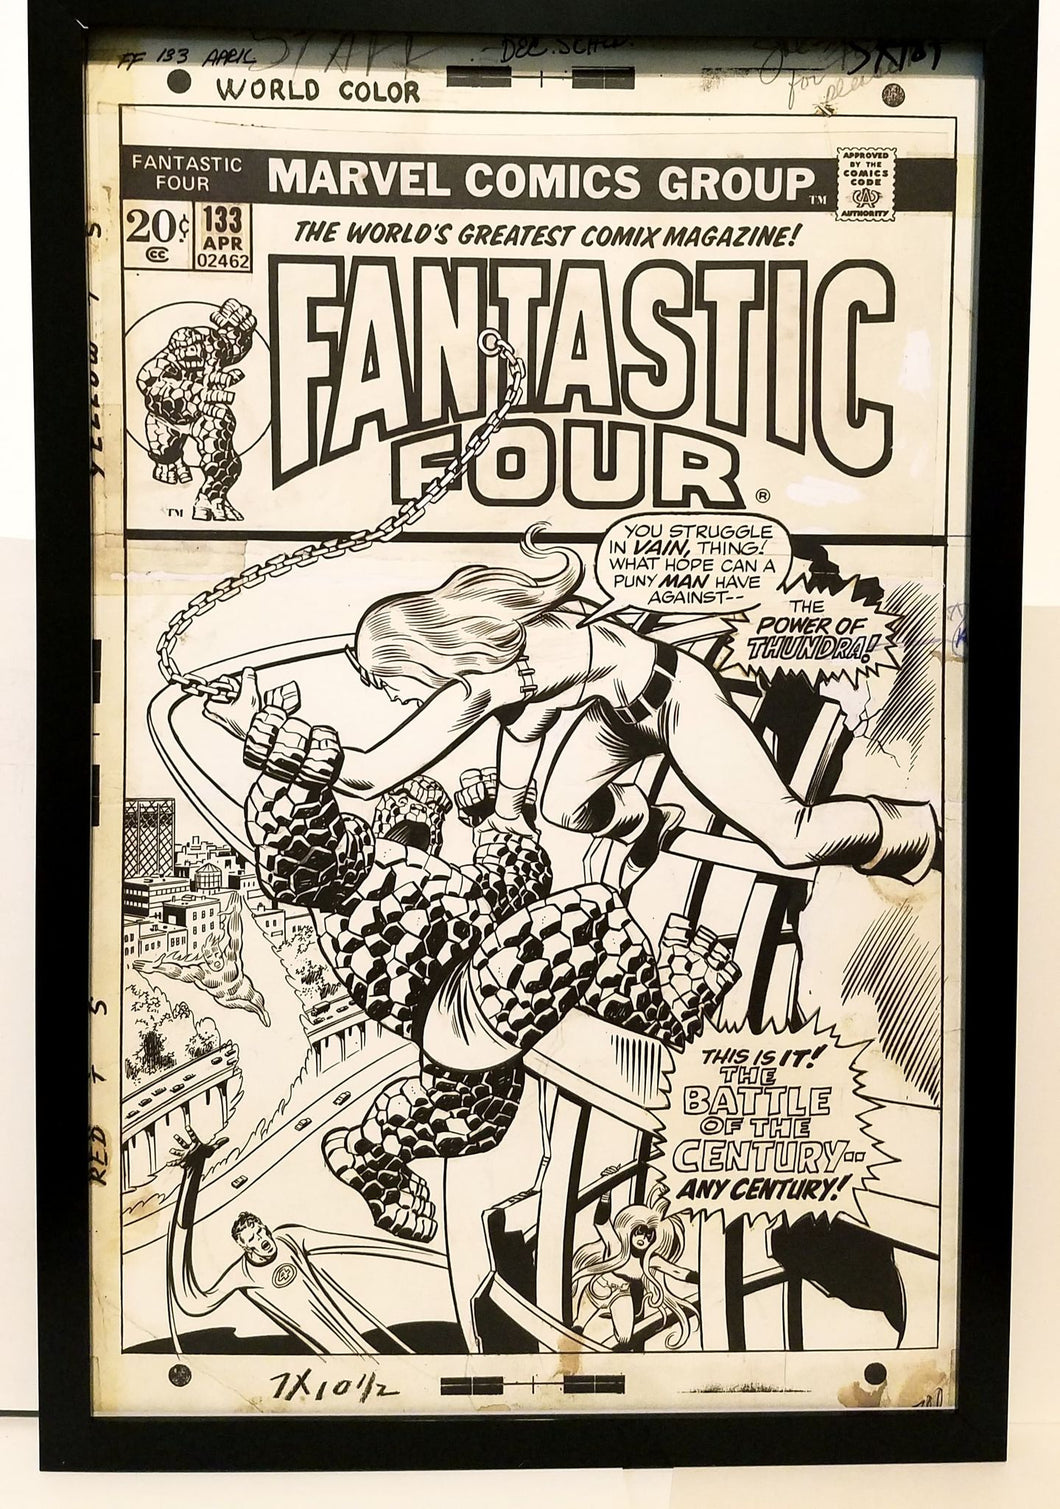 Fantastic Four #133 by John Buscema 11x17 FRAMED Original Art Poster Marvel Comics